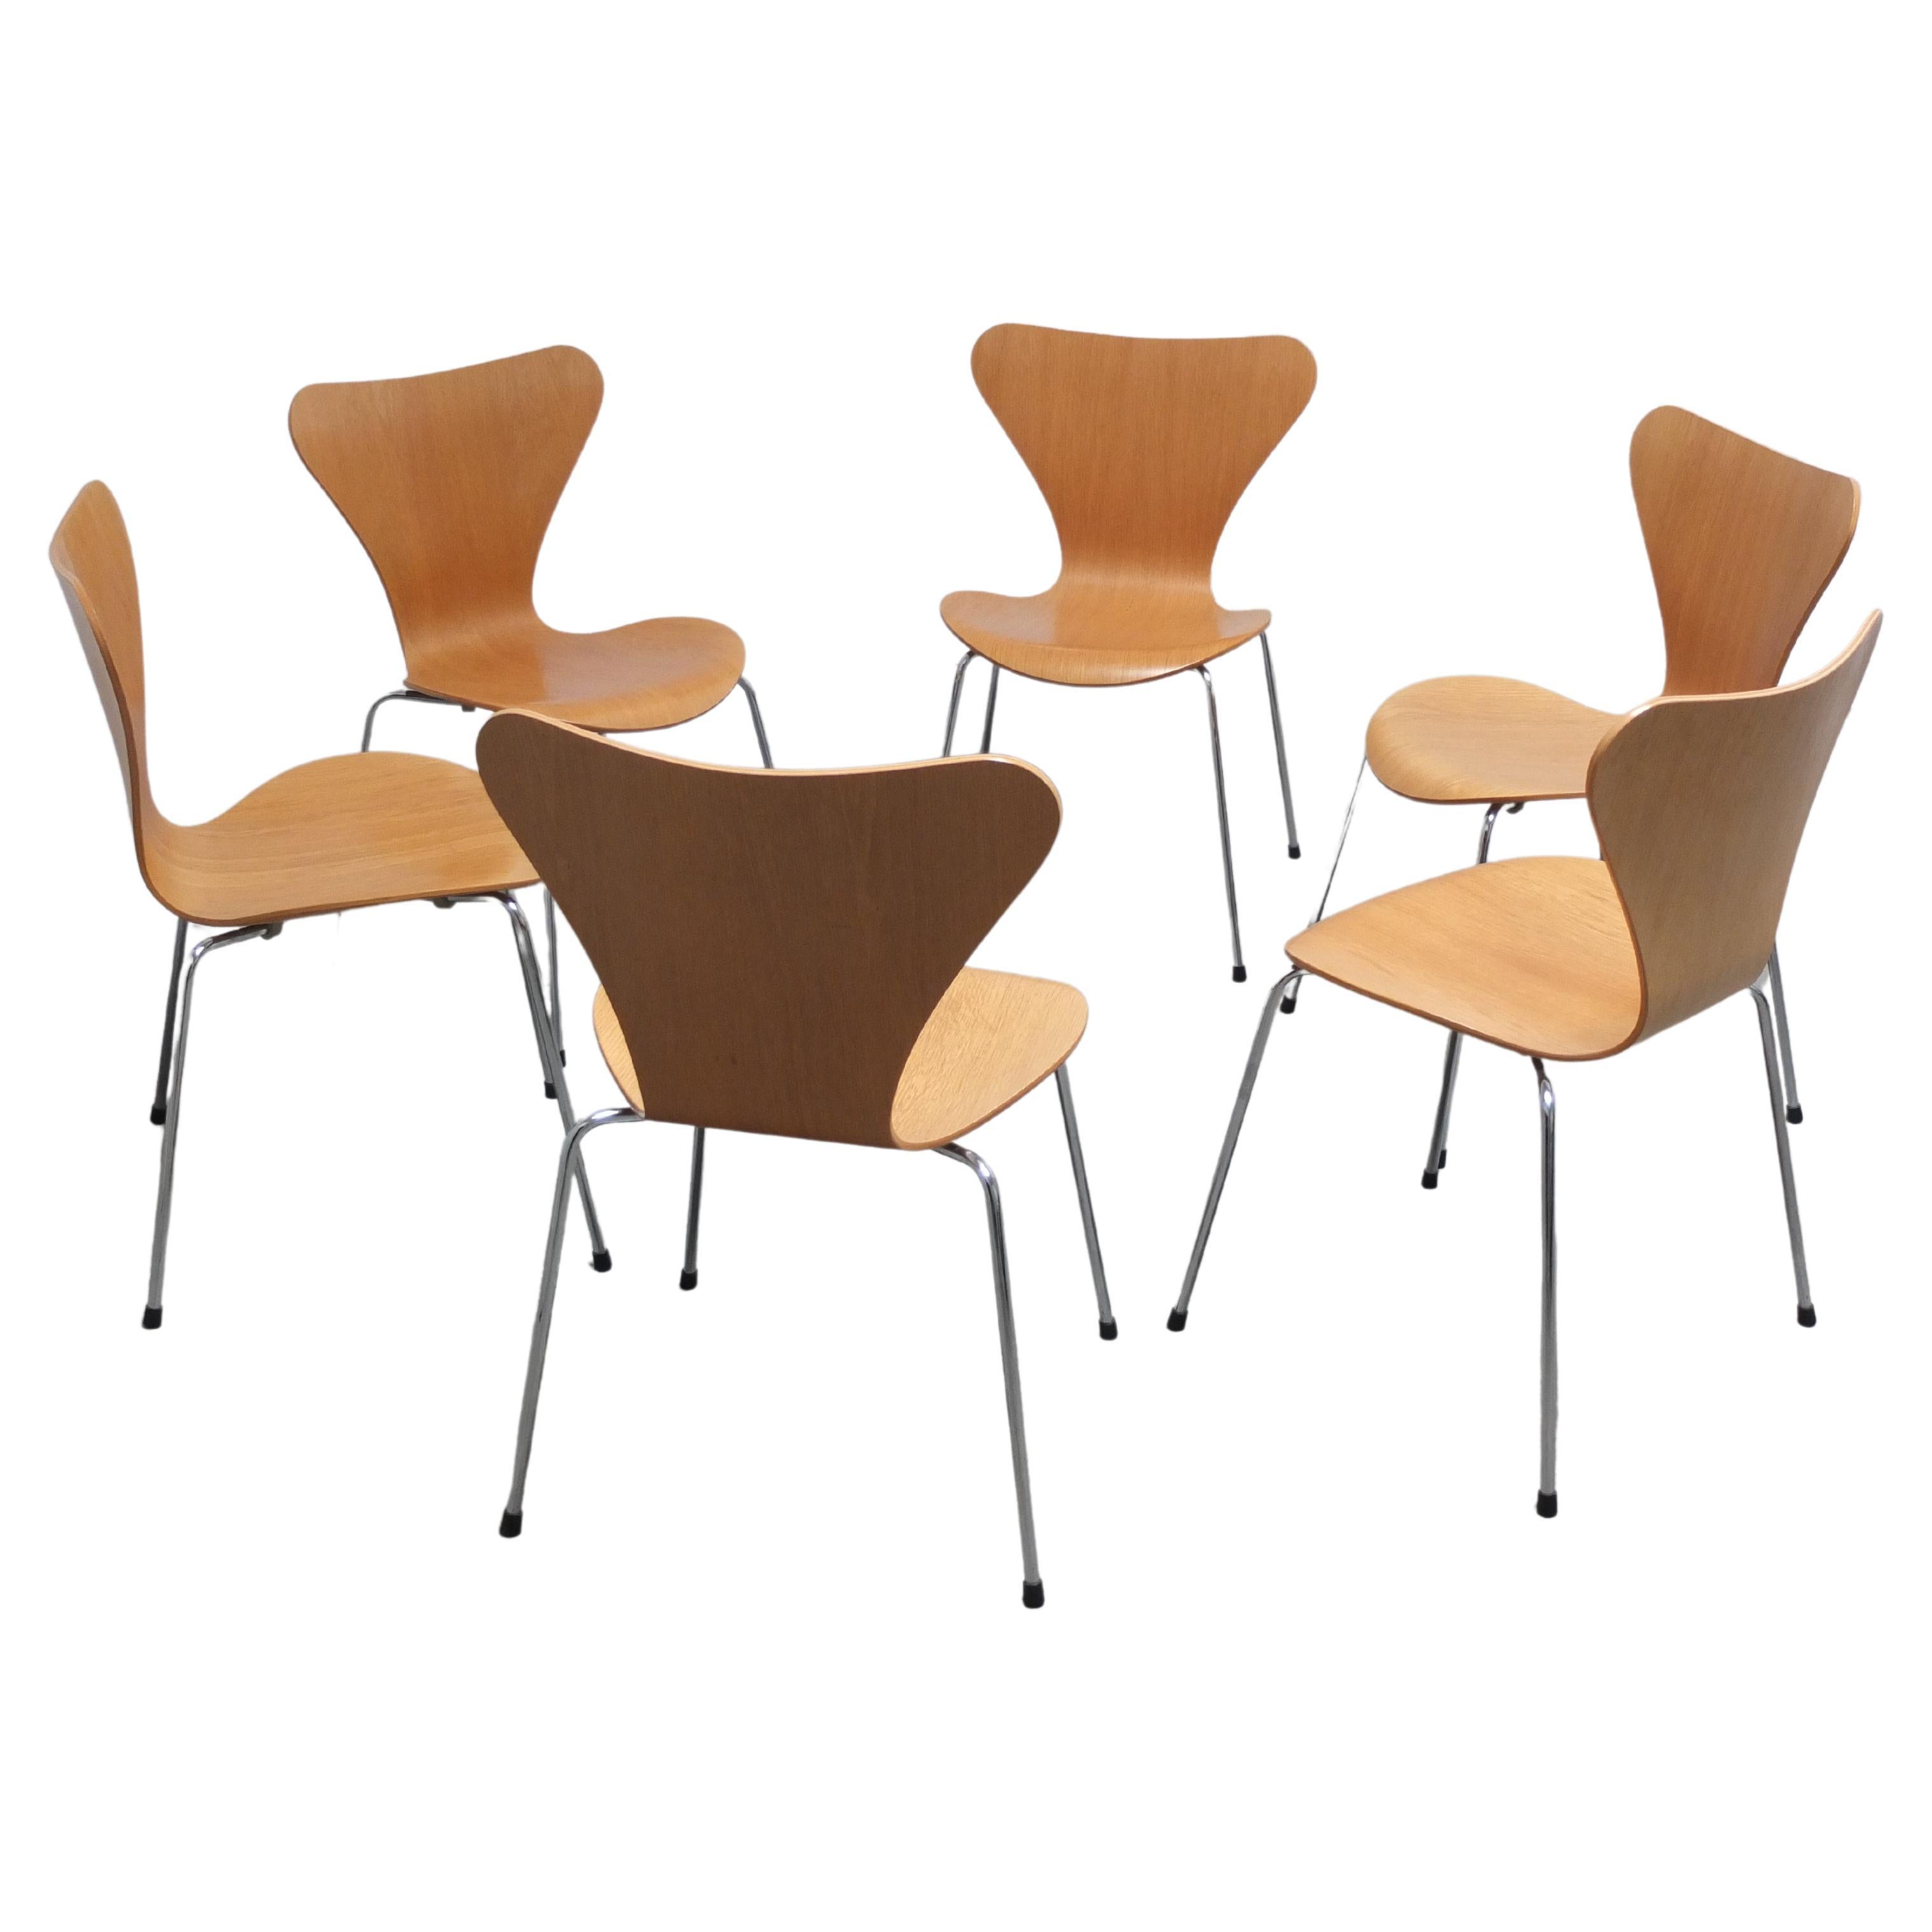 Set of 6 'Series 7' Chairs in Oak by Arne Jacobsen for Fritz Hansen, 1955